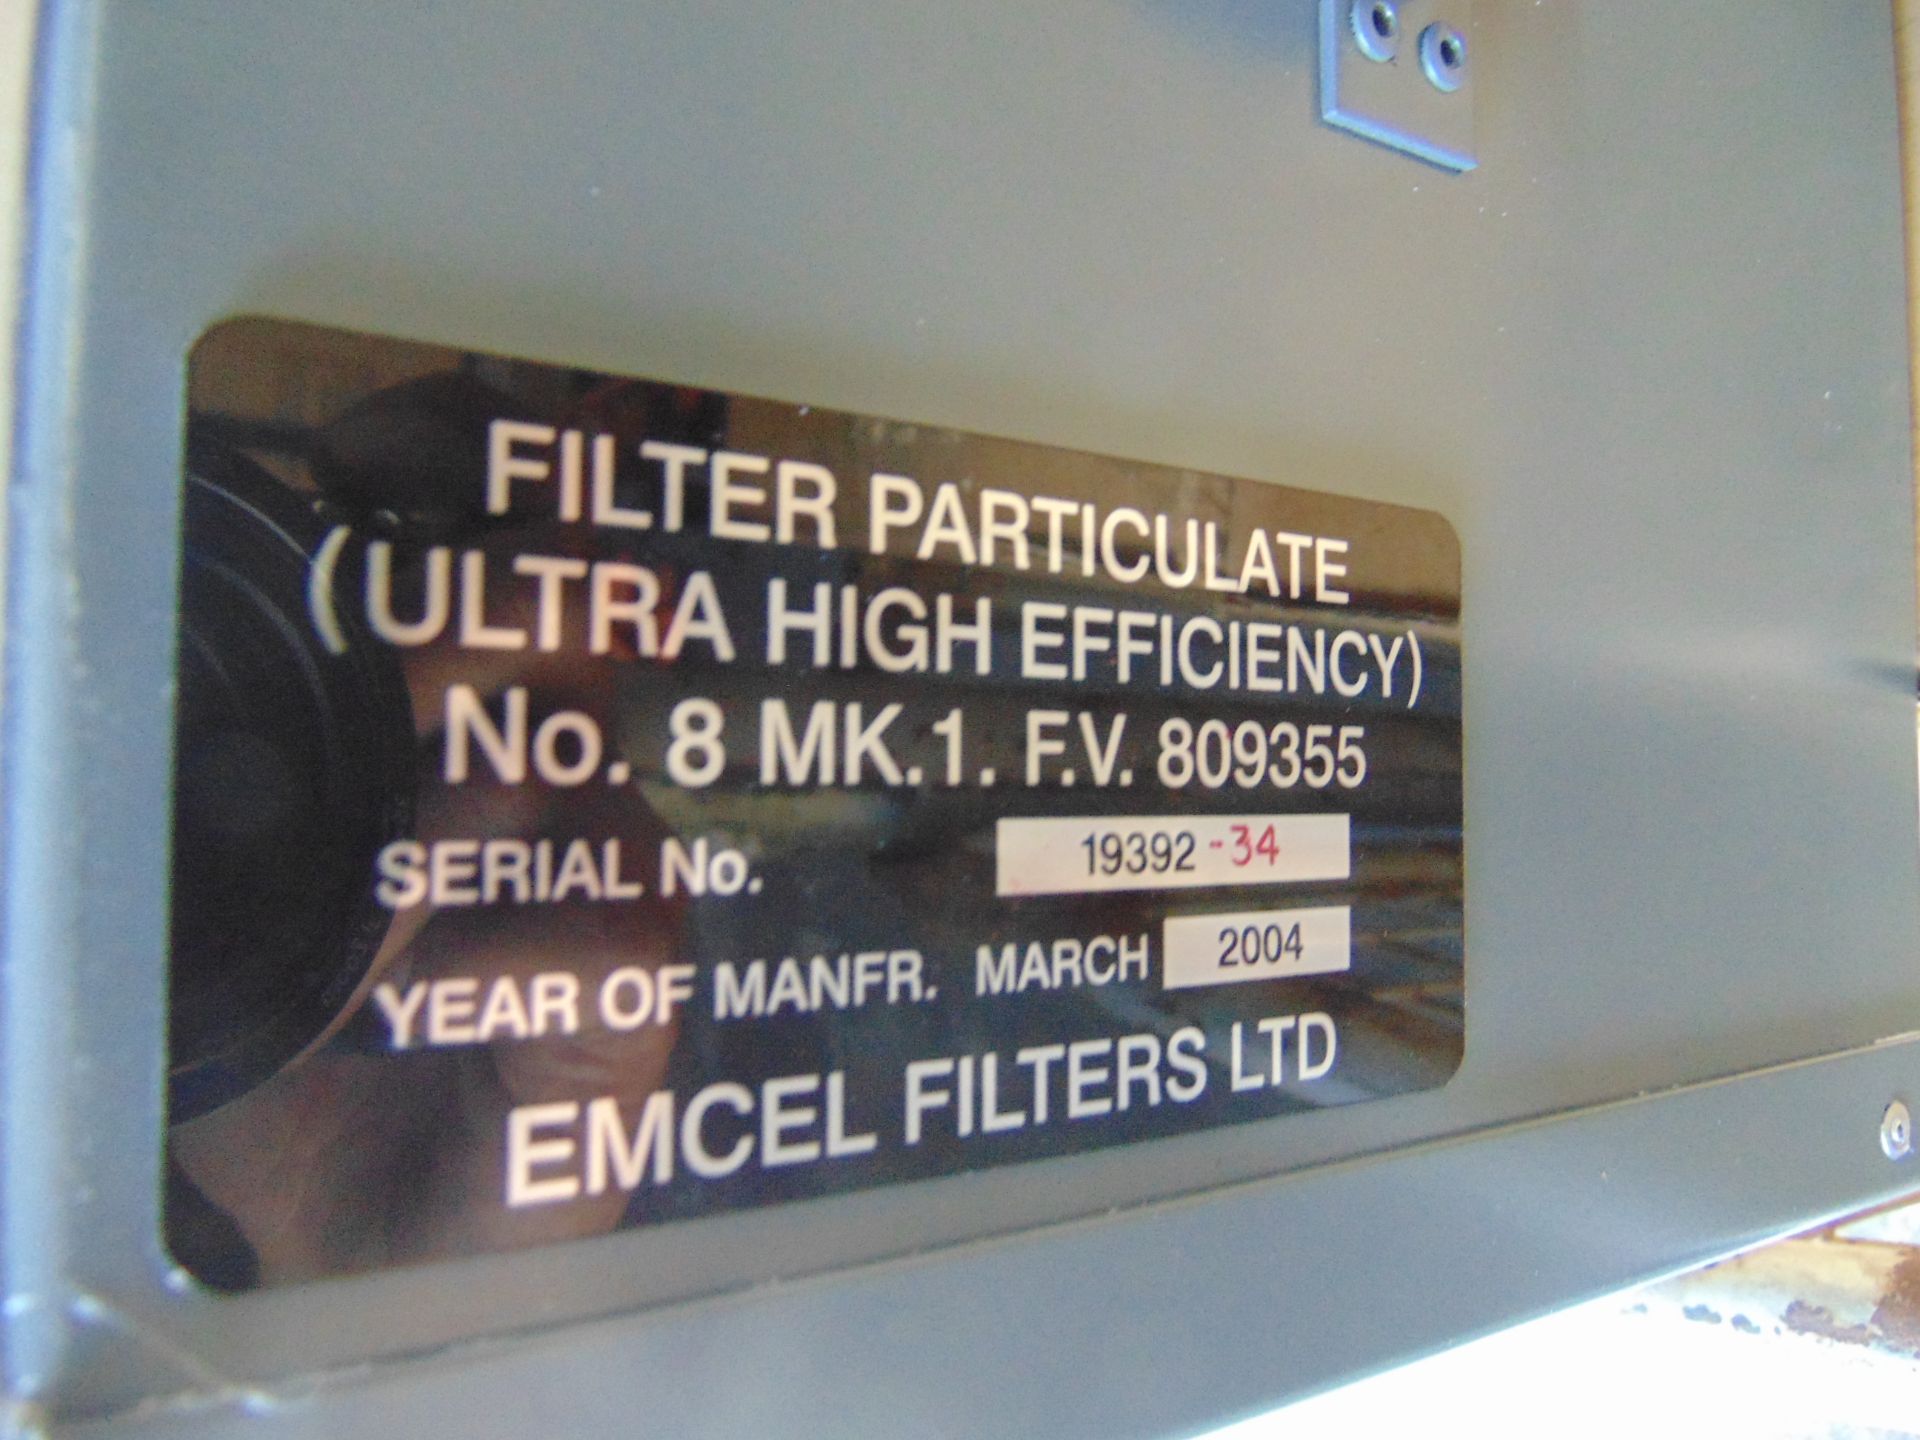 20 x FV432 No.8 Mk1 Particulate Filter P/No FV809335 - Image 4 of 7